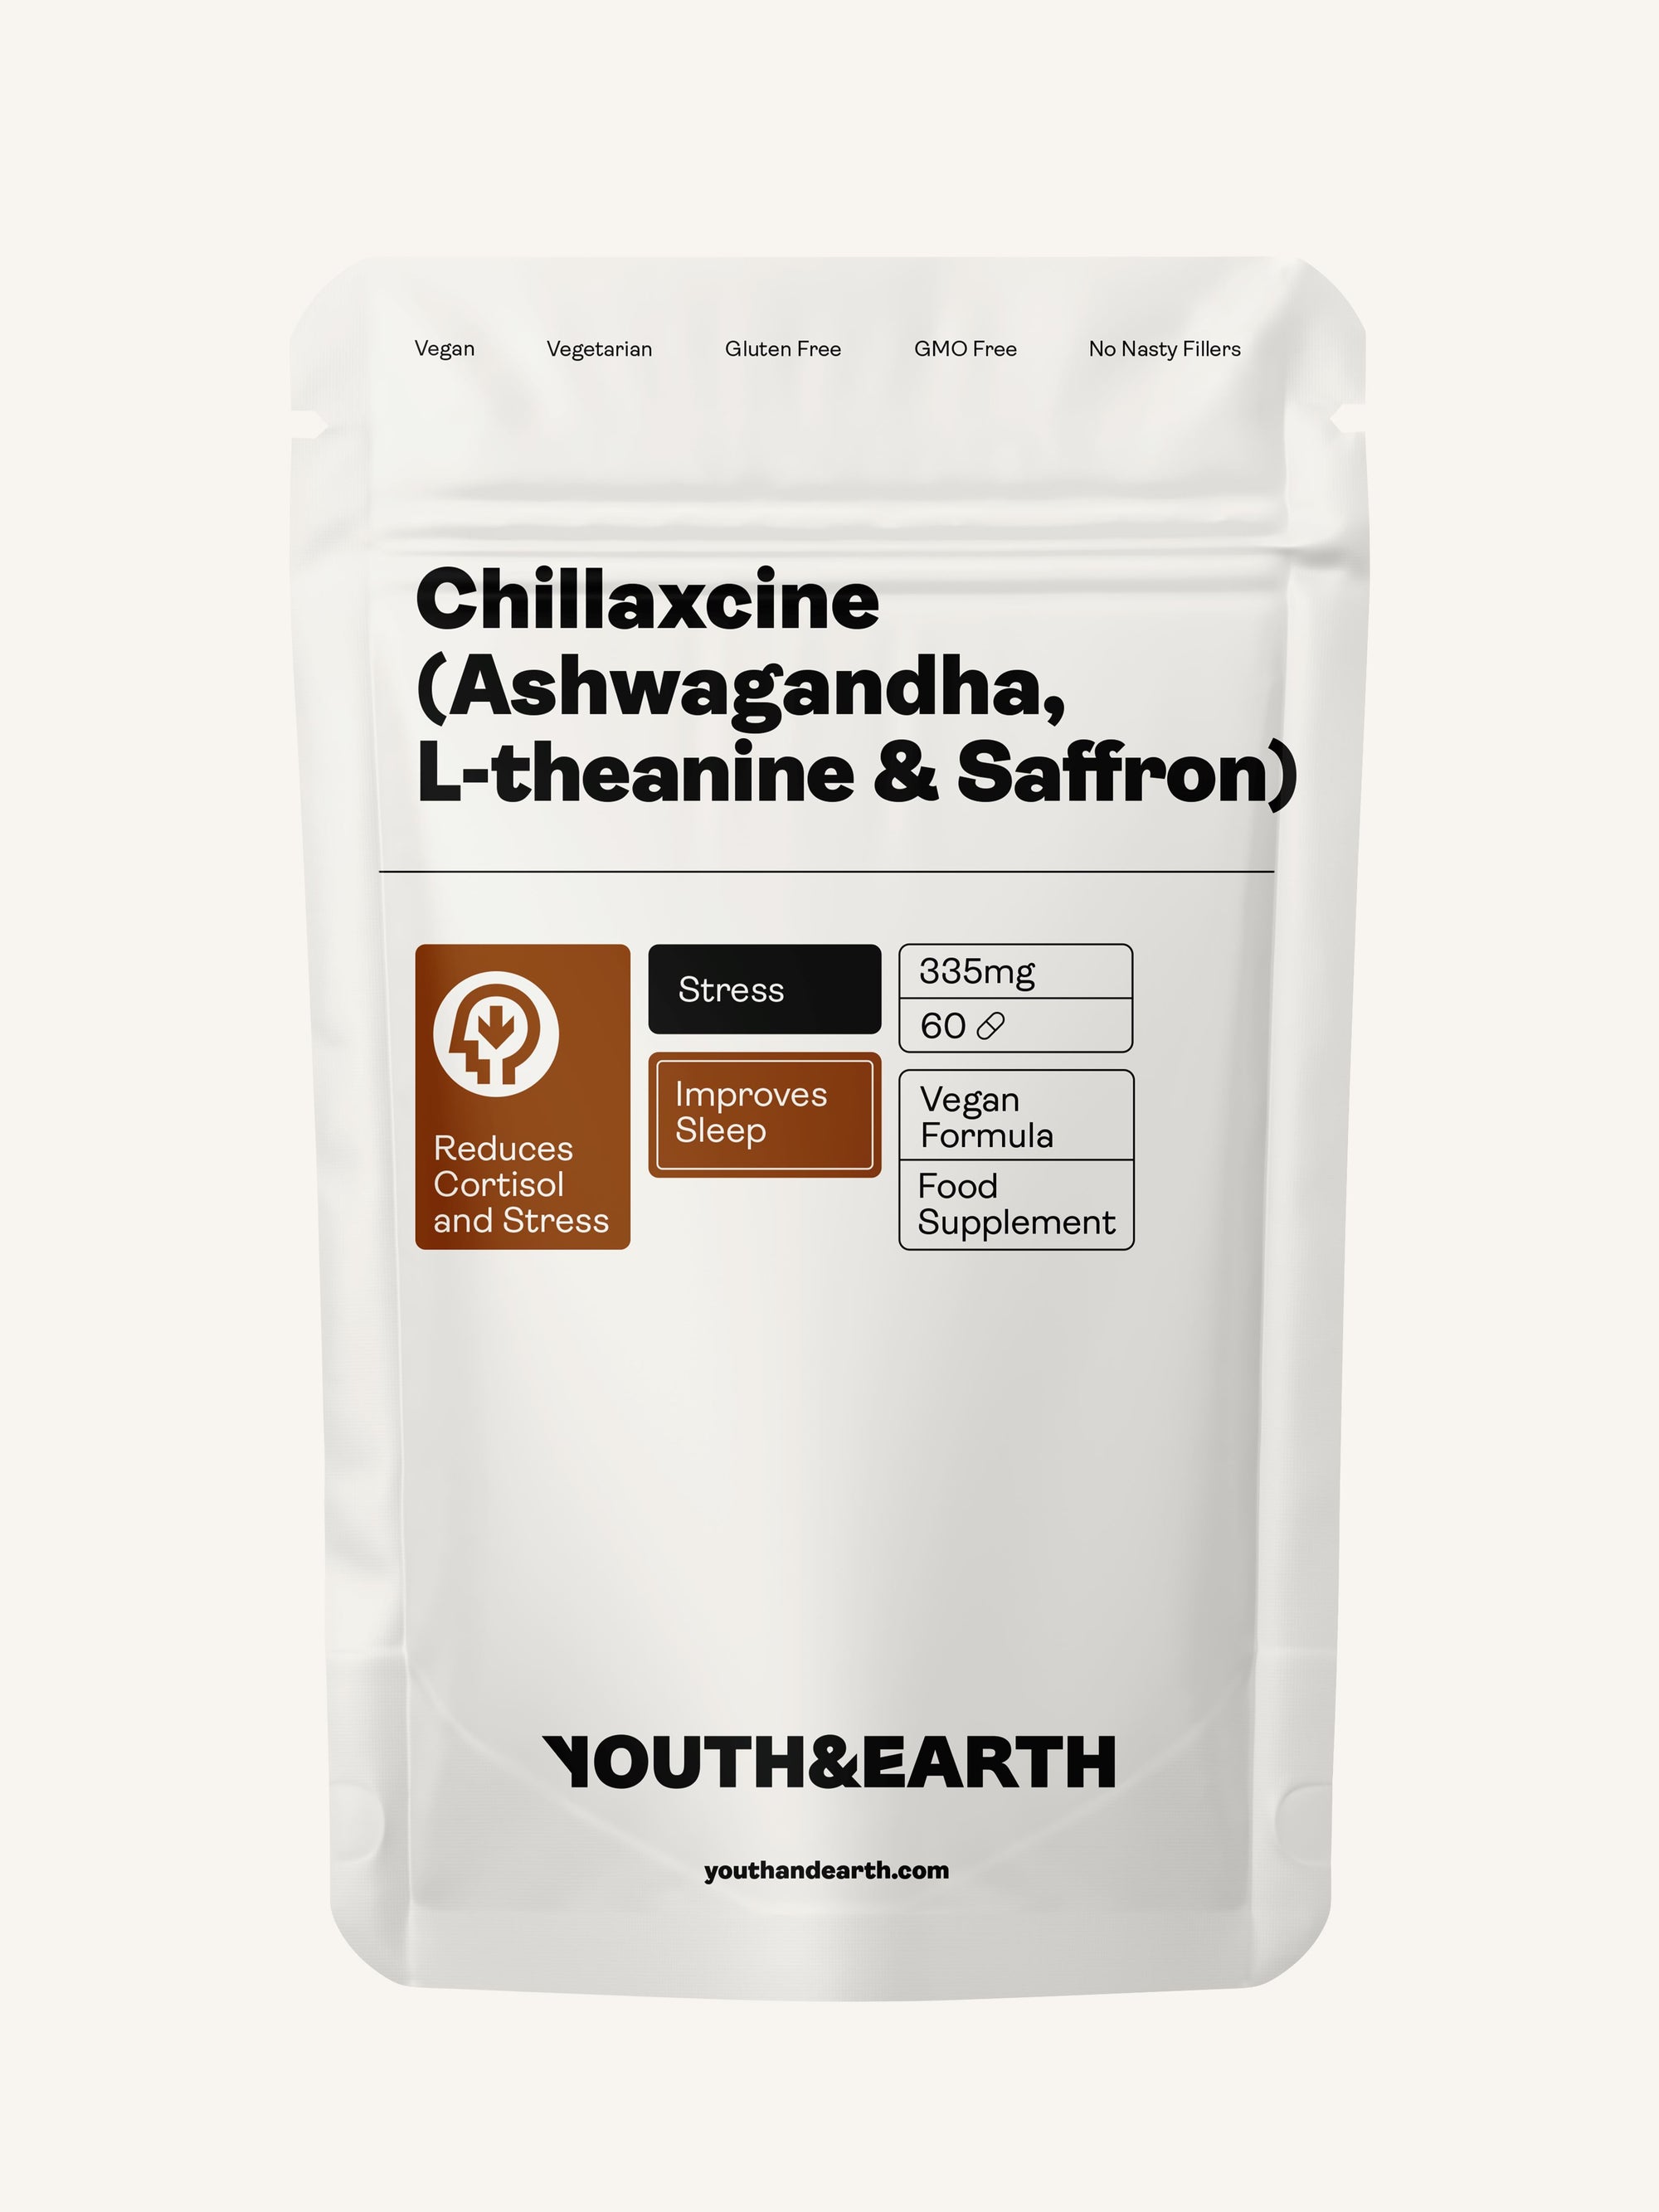 CHILLAXCINE (Ashwagandha, L-theanine & Saffron) – 335mg x 60 Capsules Ashwagandha, L-theanine & Saffron Youth & Earth 